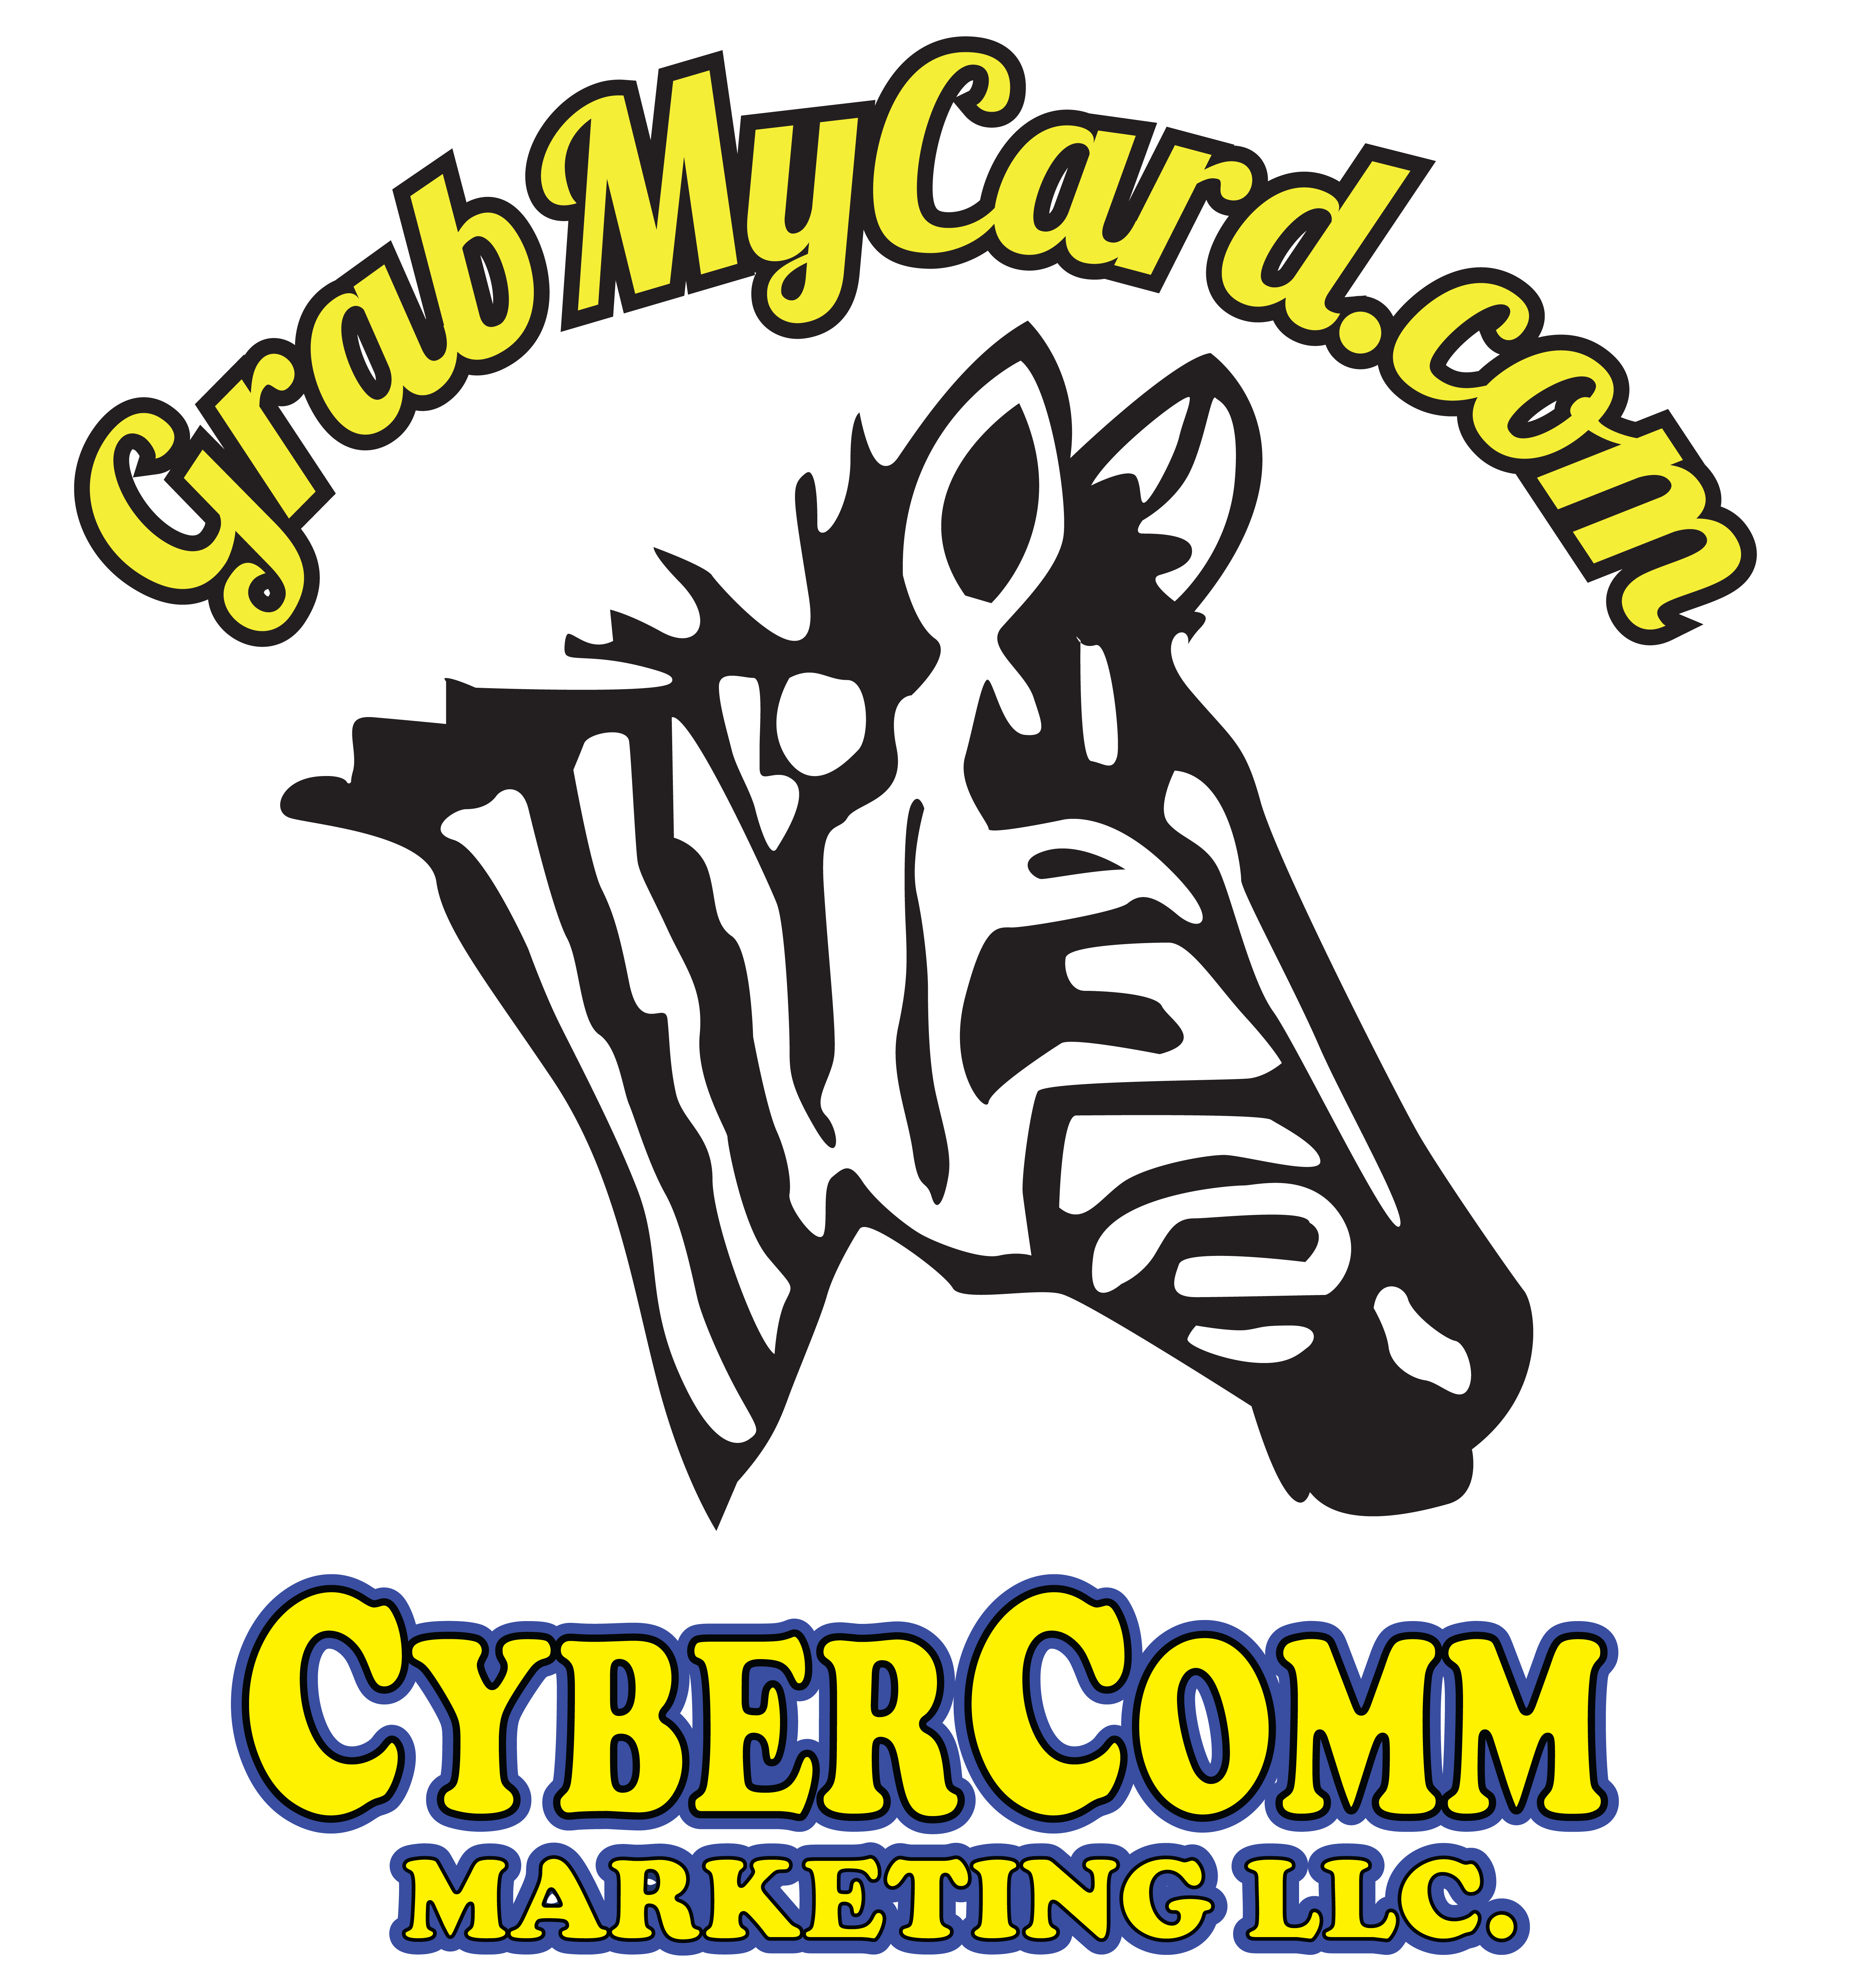 Our Bar Info is an online directory from GrabMyCard.com & CyberComm Marketing, LLC